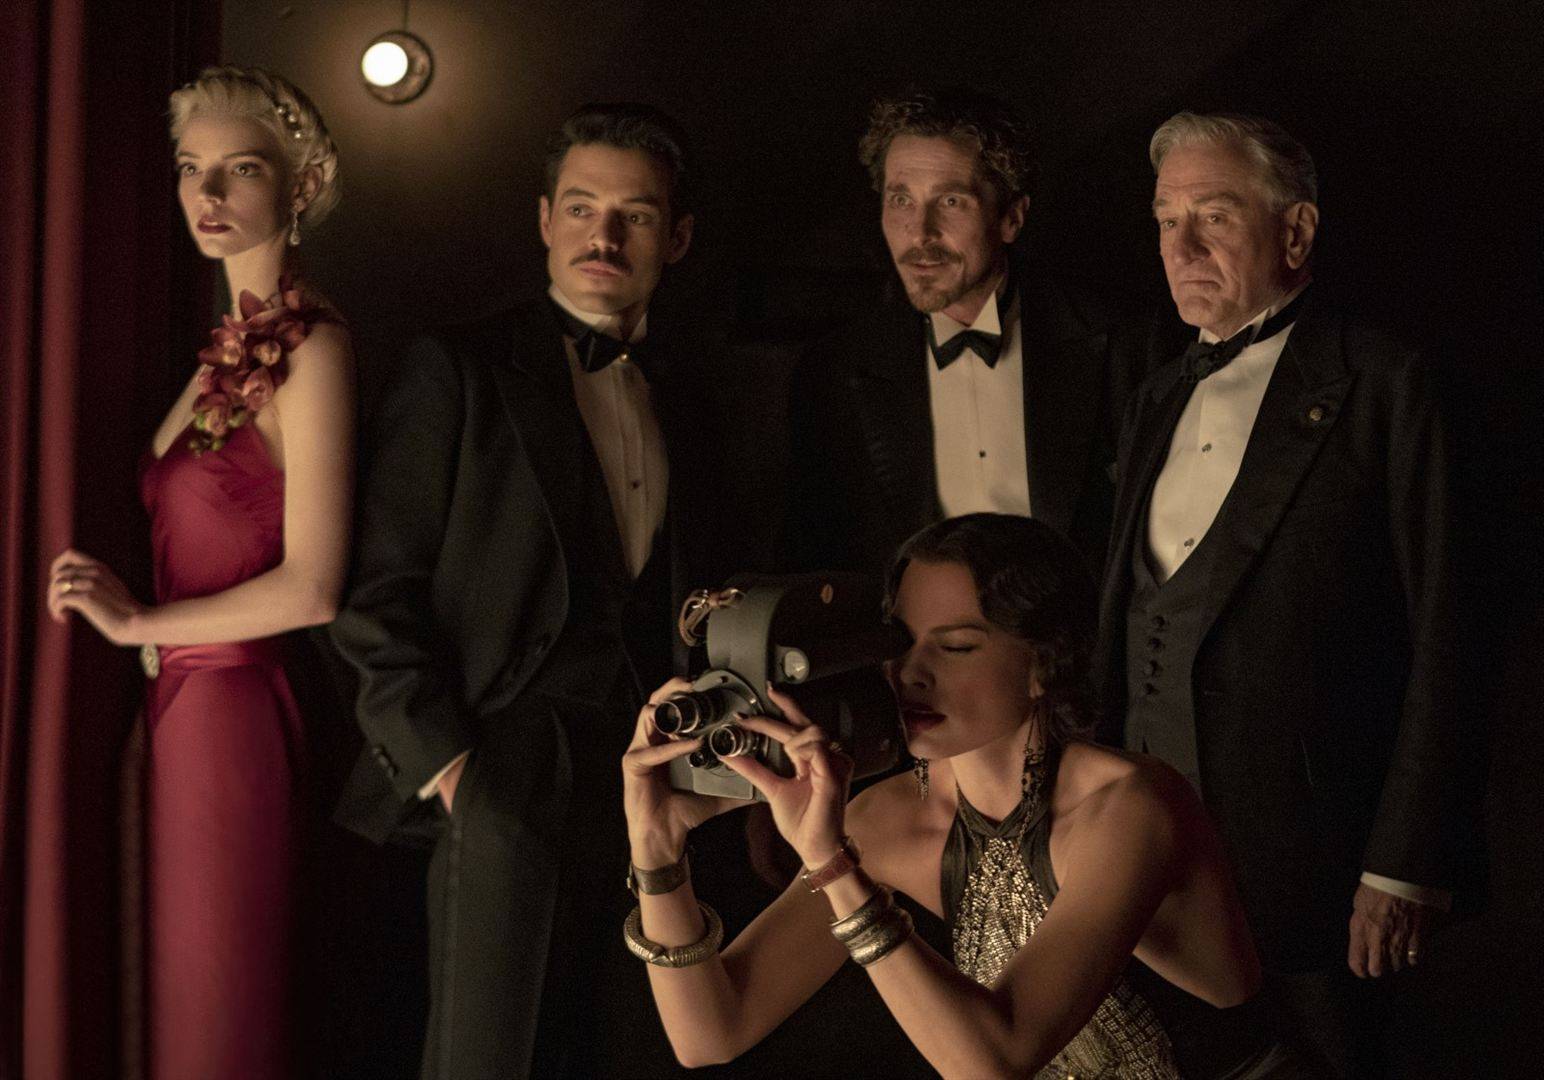 Christian Bale, Rami Malek, Margot Robbie, Anya Taylor-Joy et Robert De Niro dans "Amsterdam" (2022)